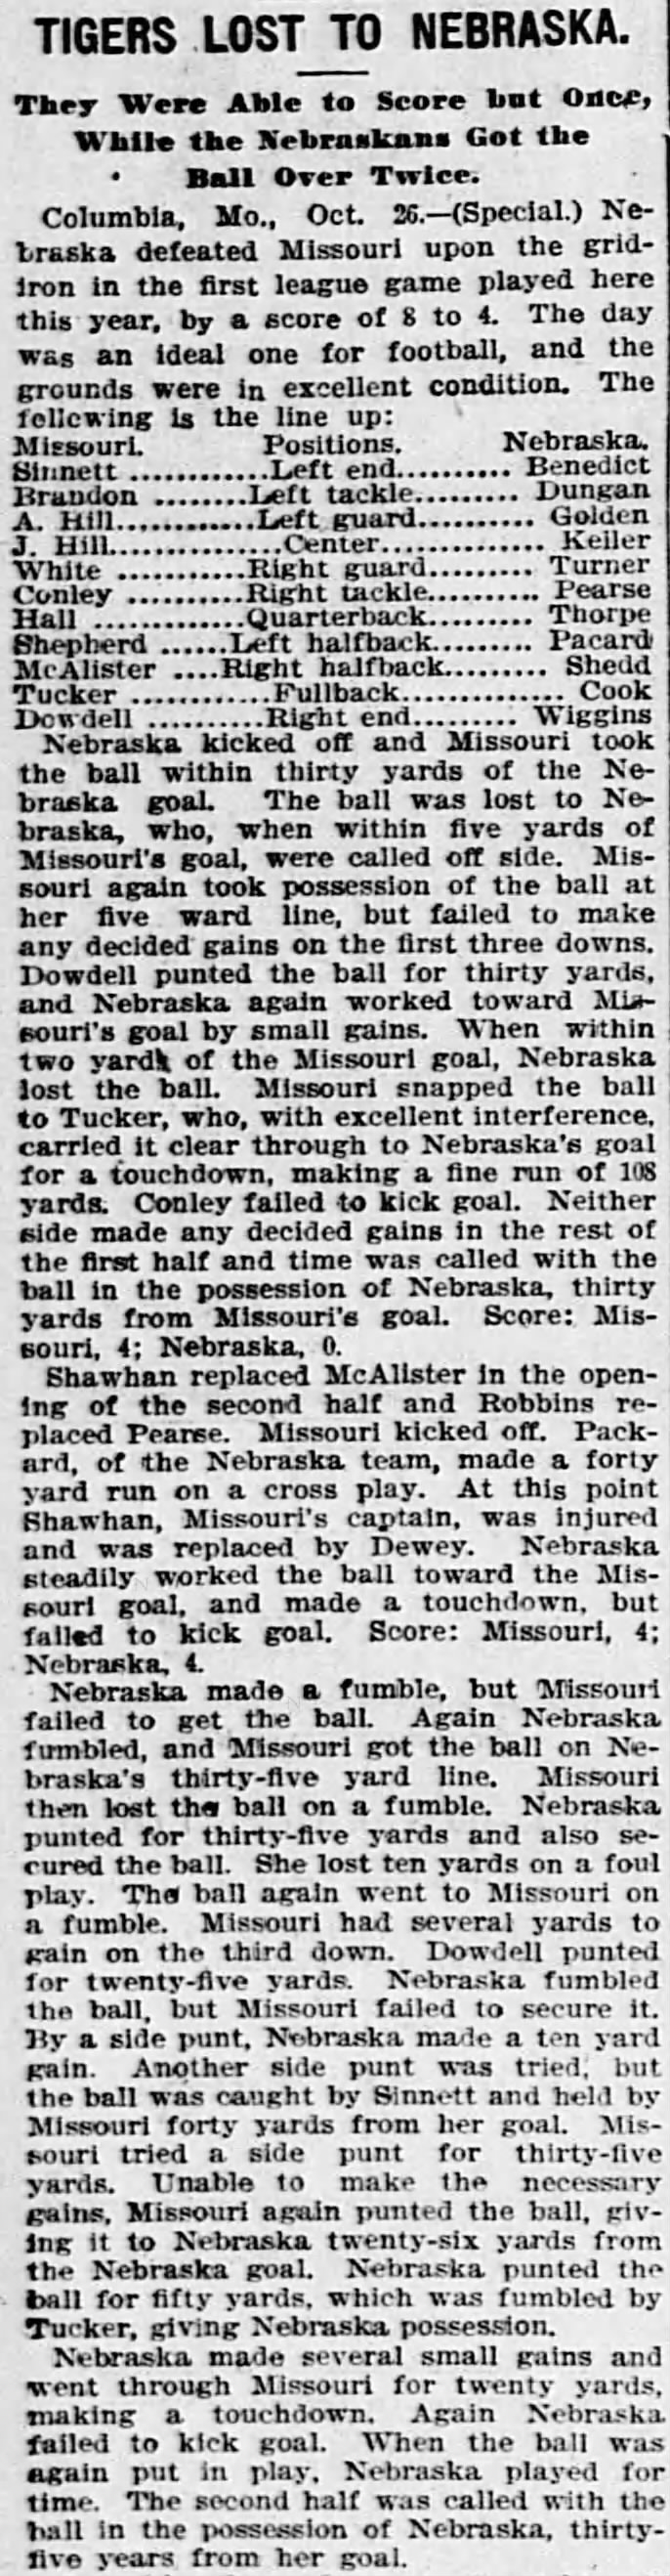 1896 Nebraska-Missouri football